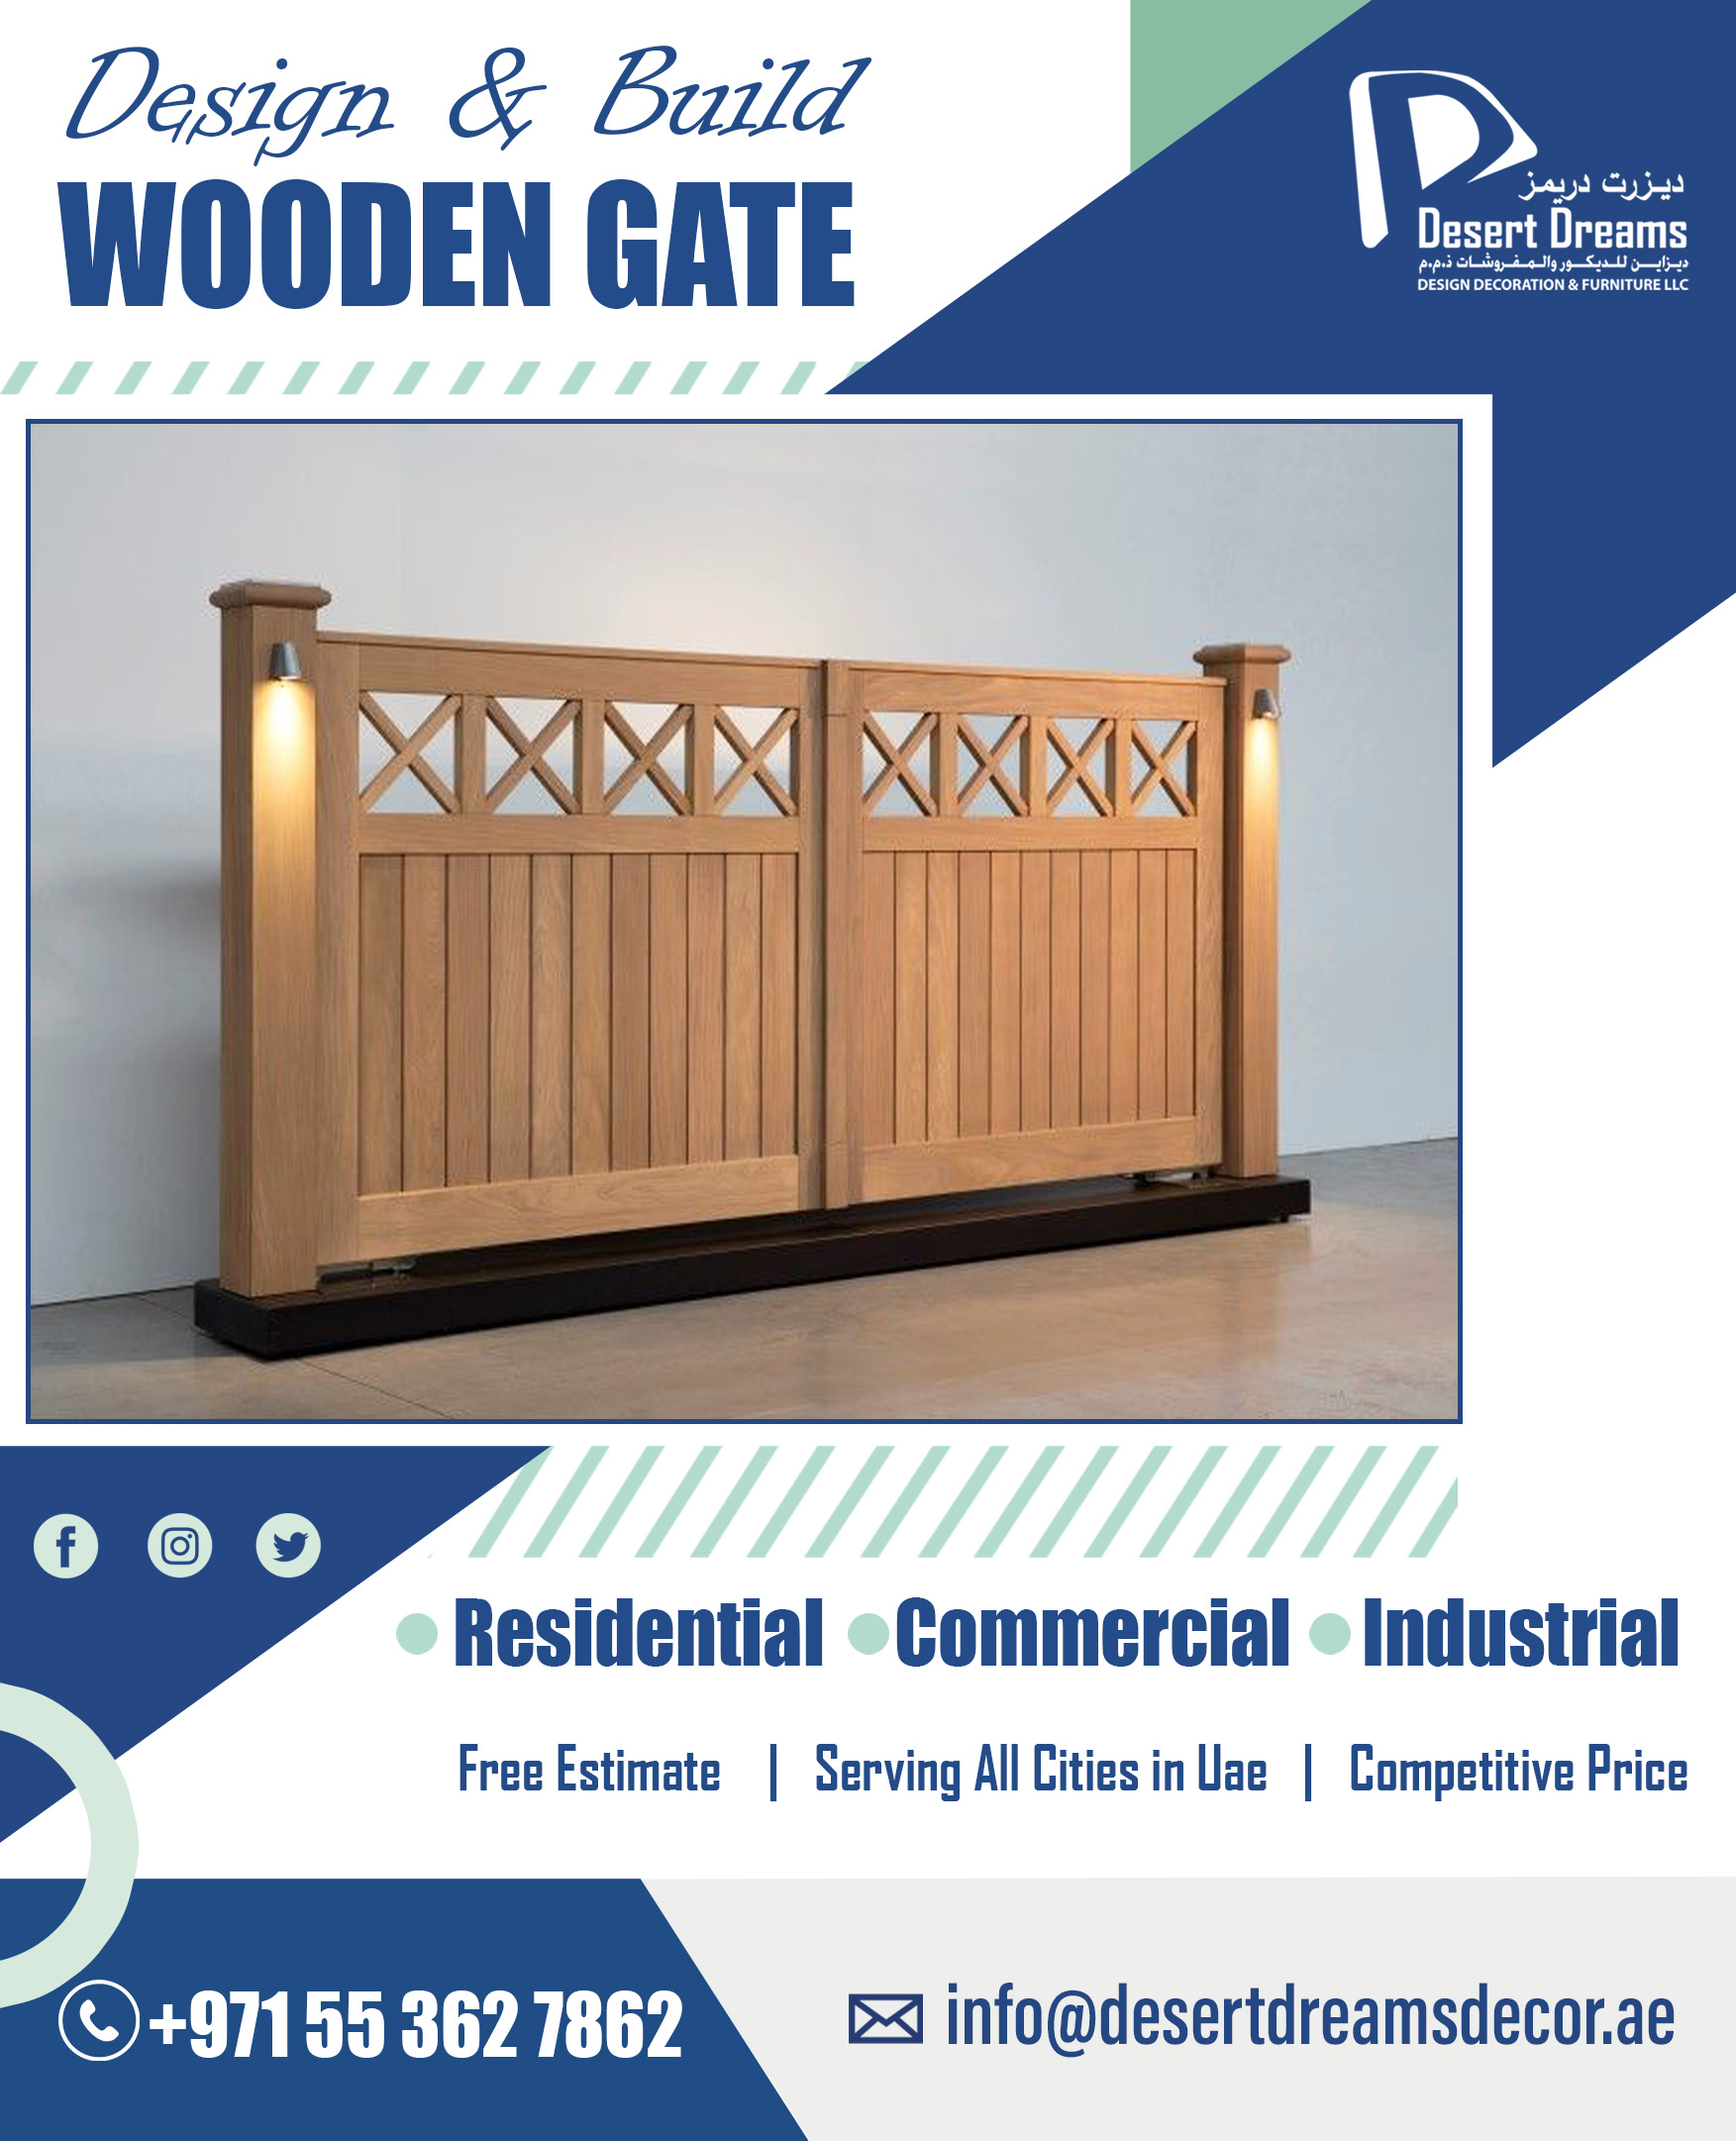 Wooden Fence Company in UAE (2).jpg